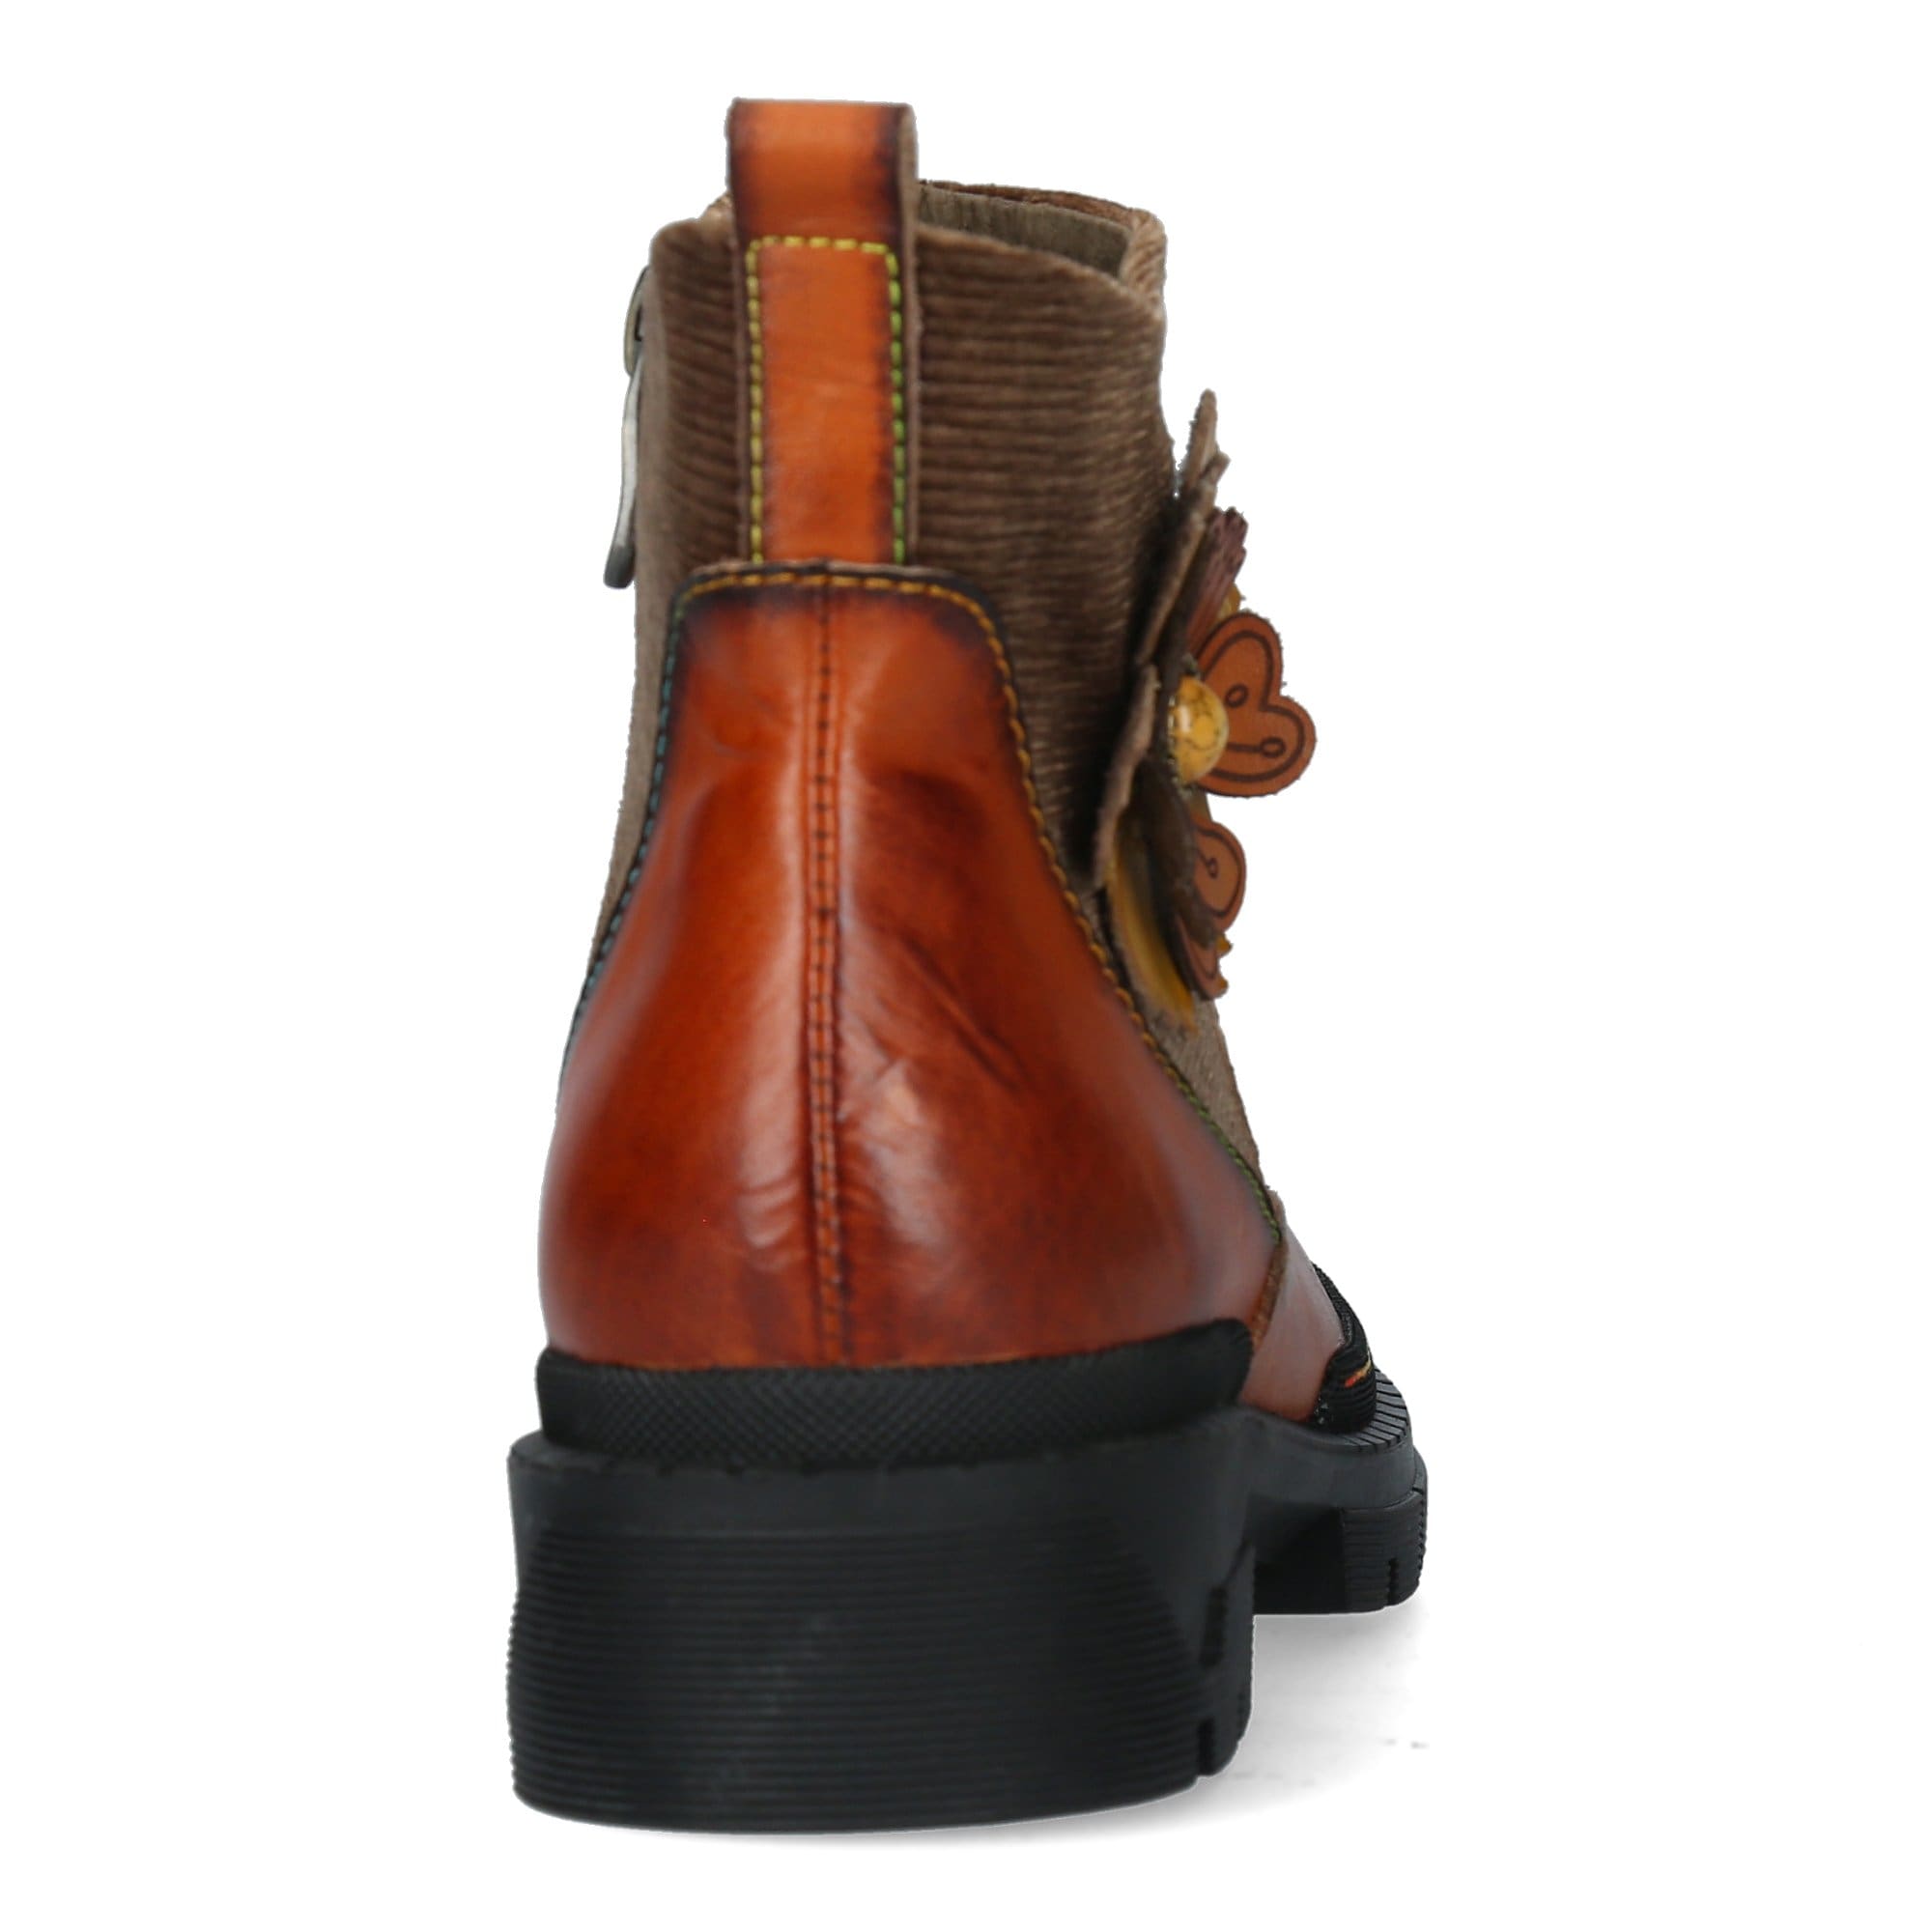 Shoe KAILIO 11 - Boots